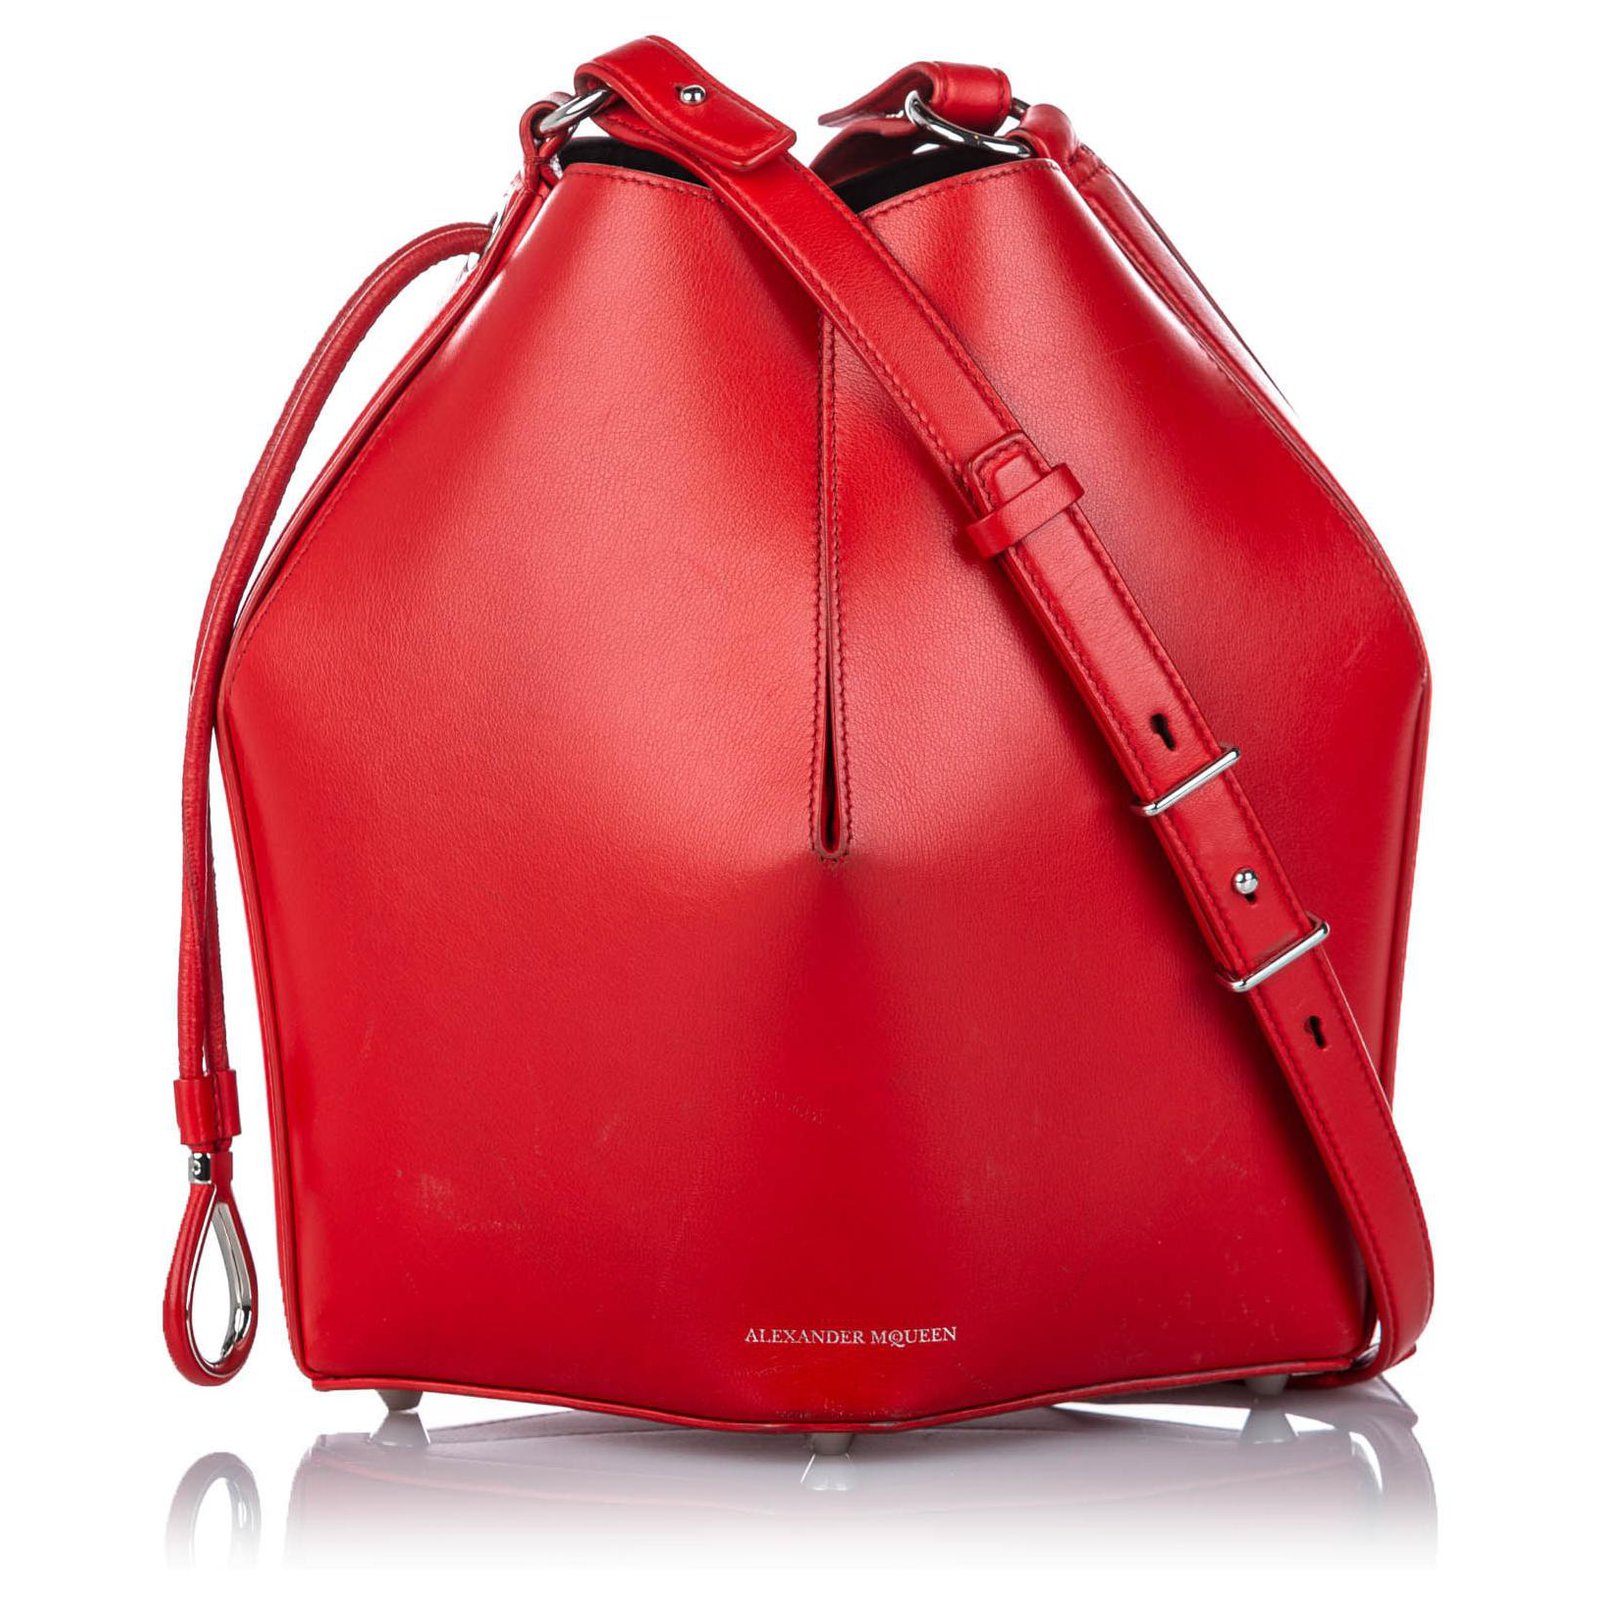 Bucket bags Alexander Mcqueen - The Bucket Bag lust red bag -  5294150SI0I6248